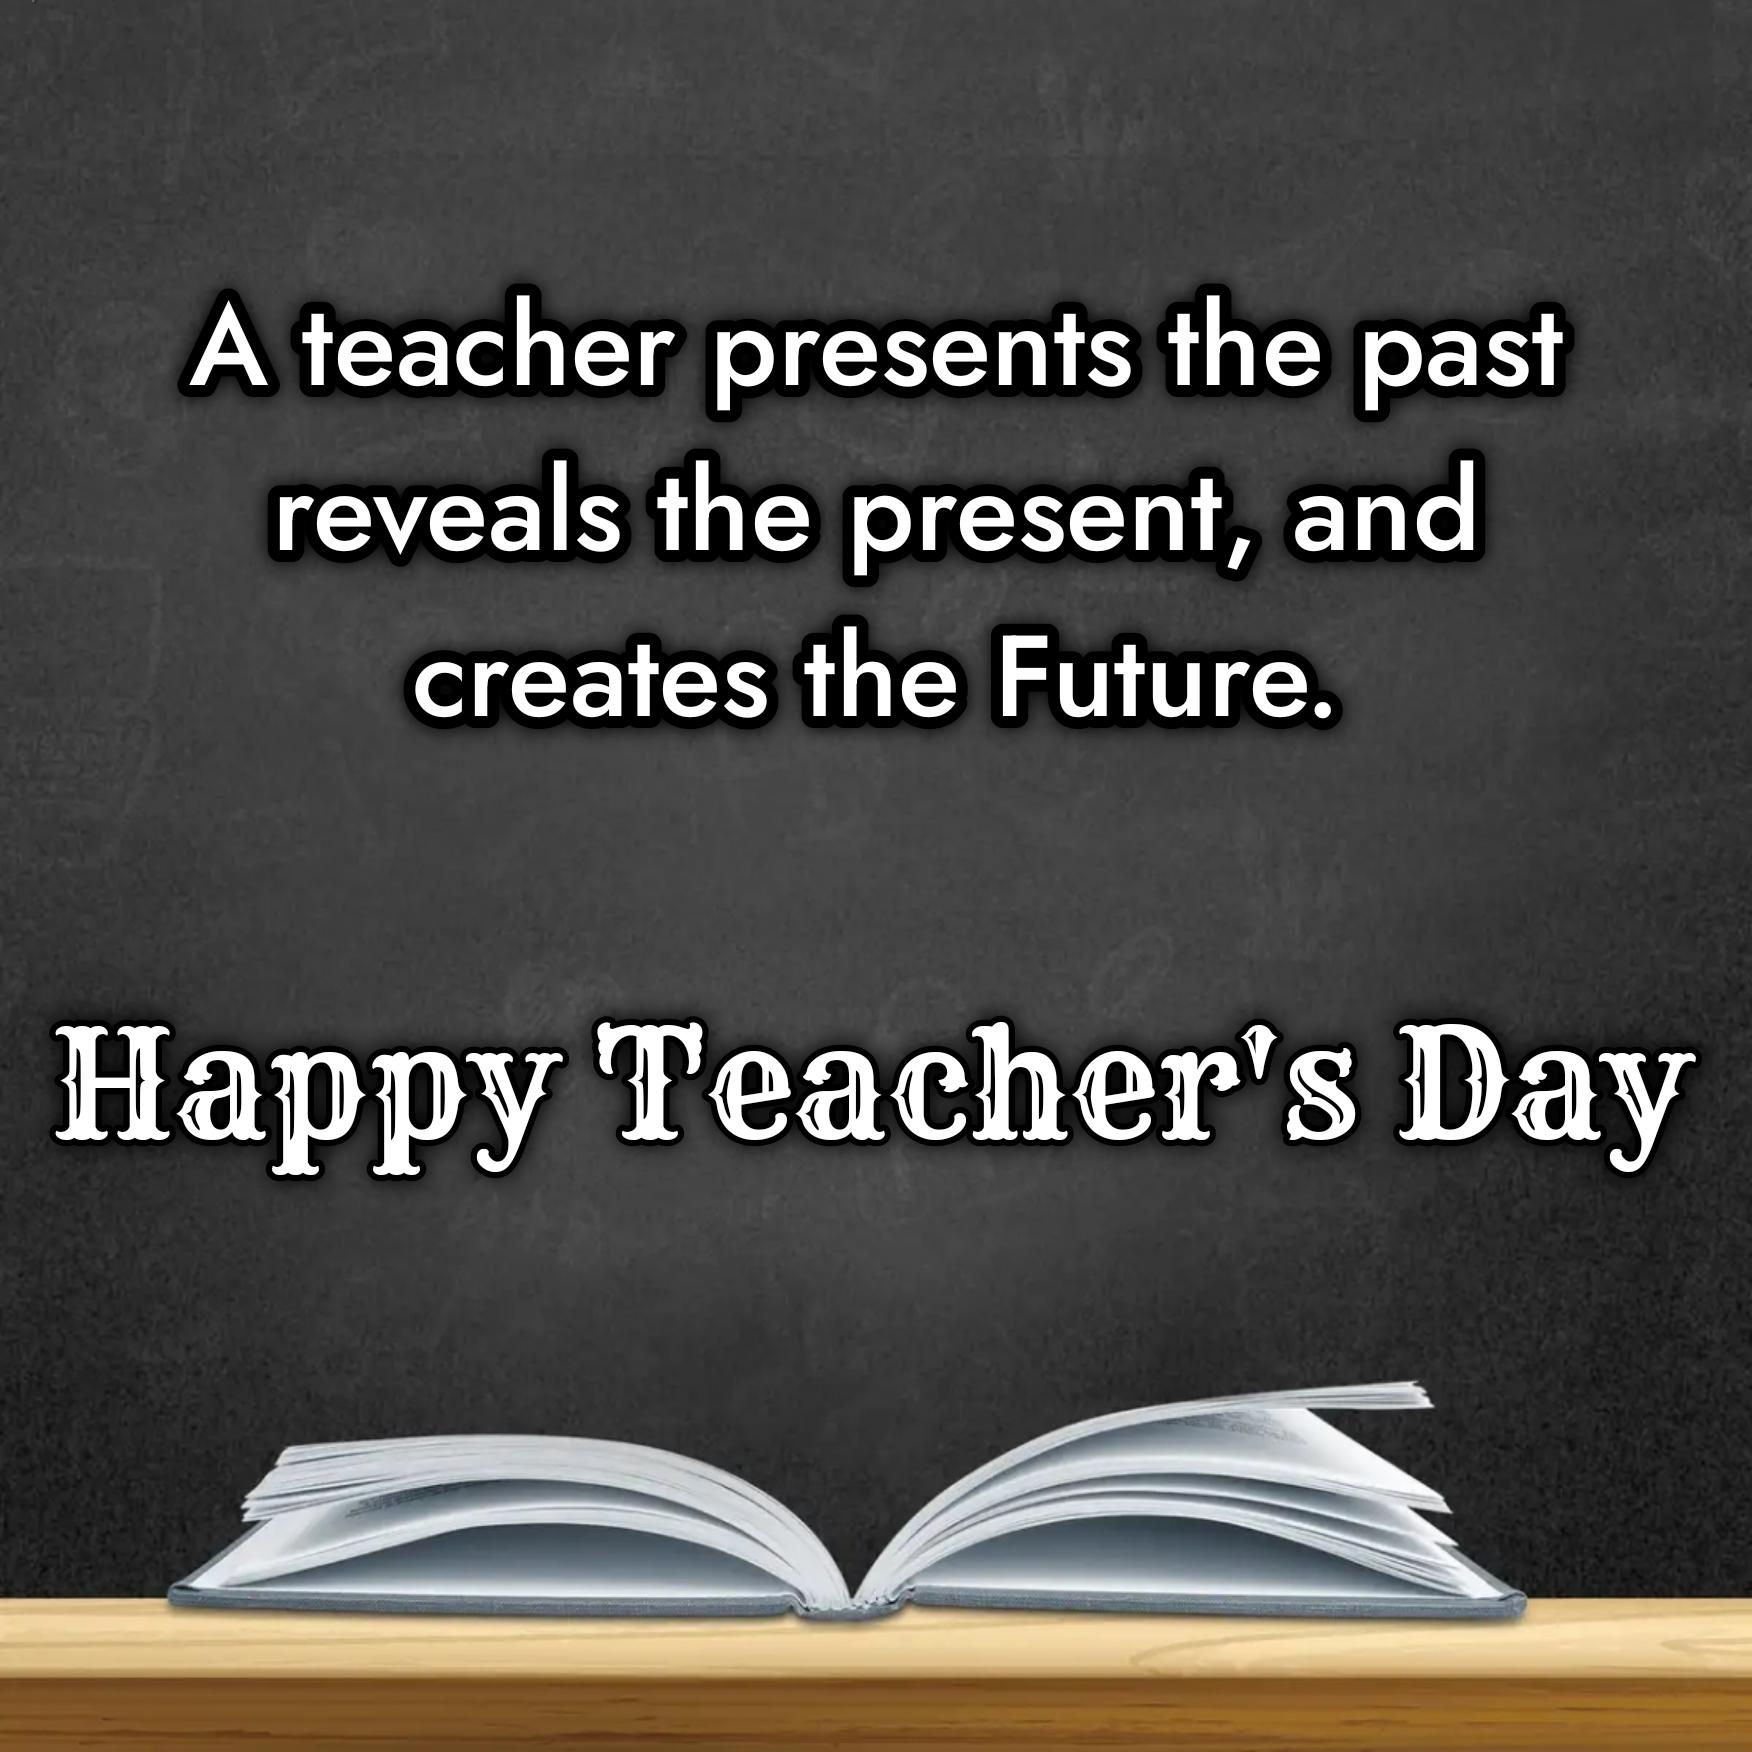 A teacher presents the past reveals the present